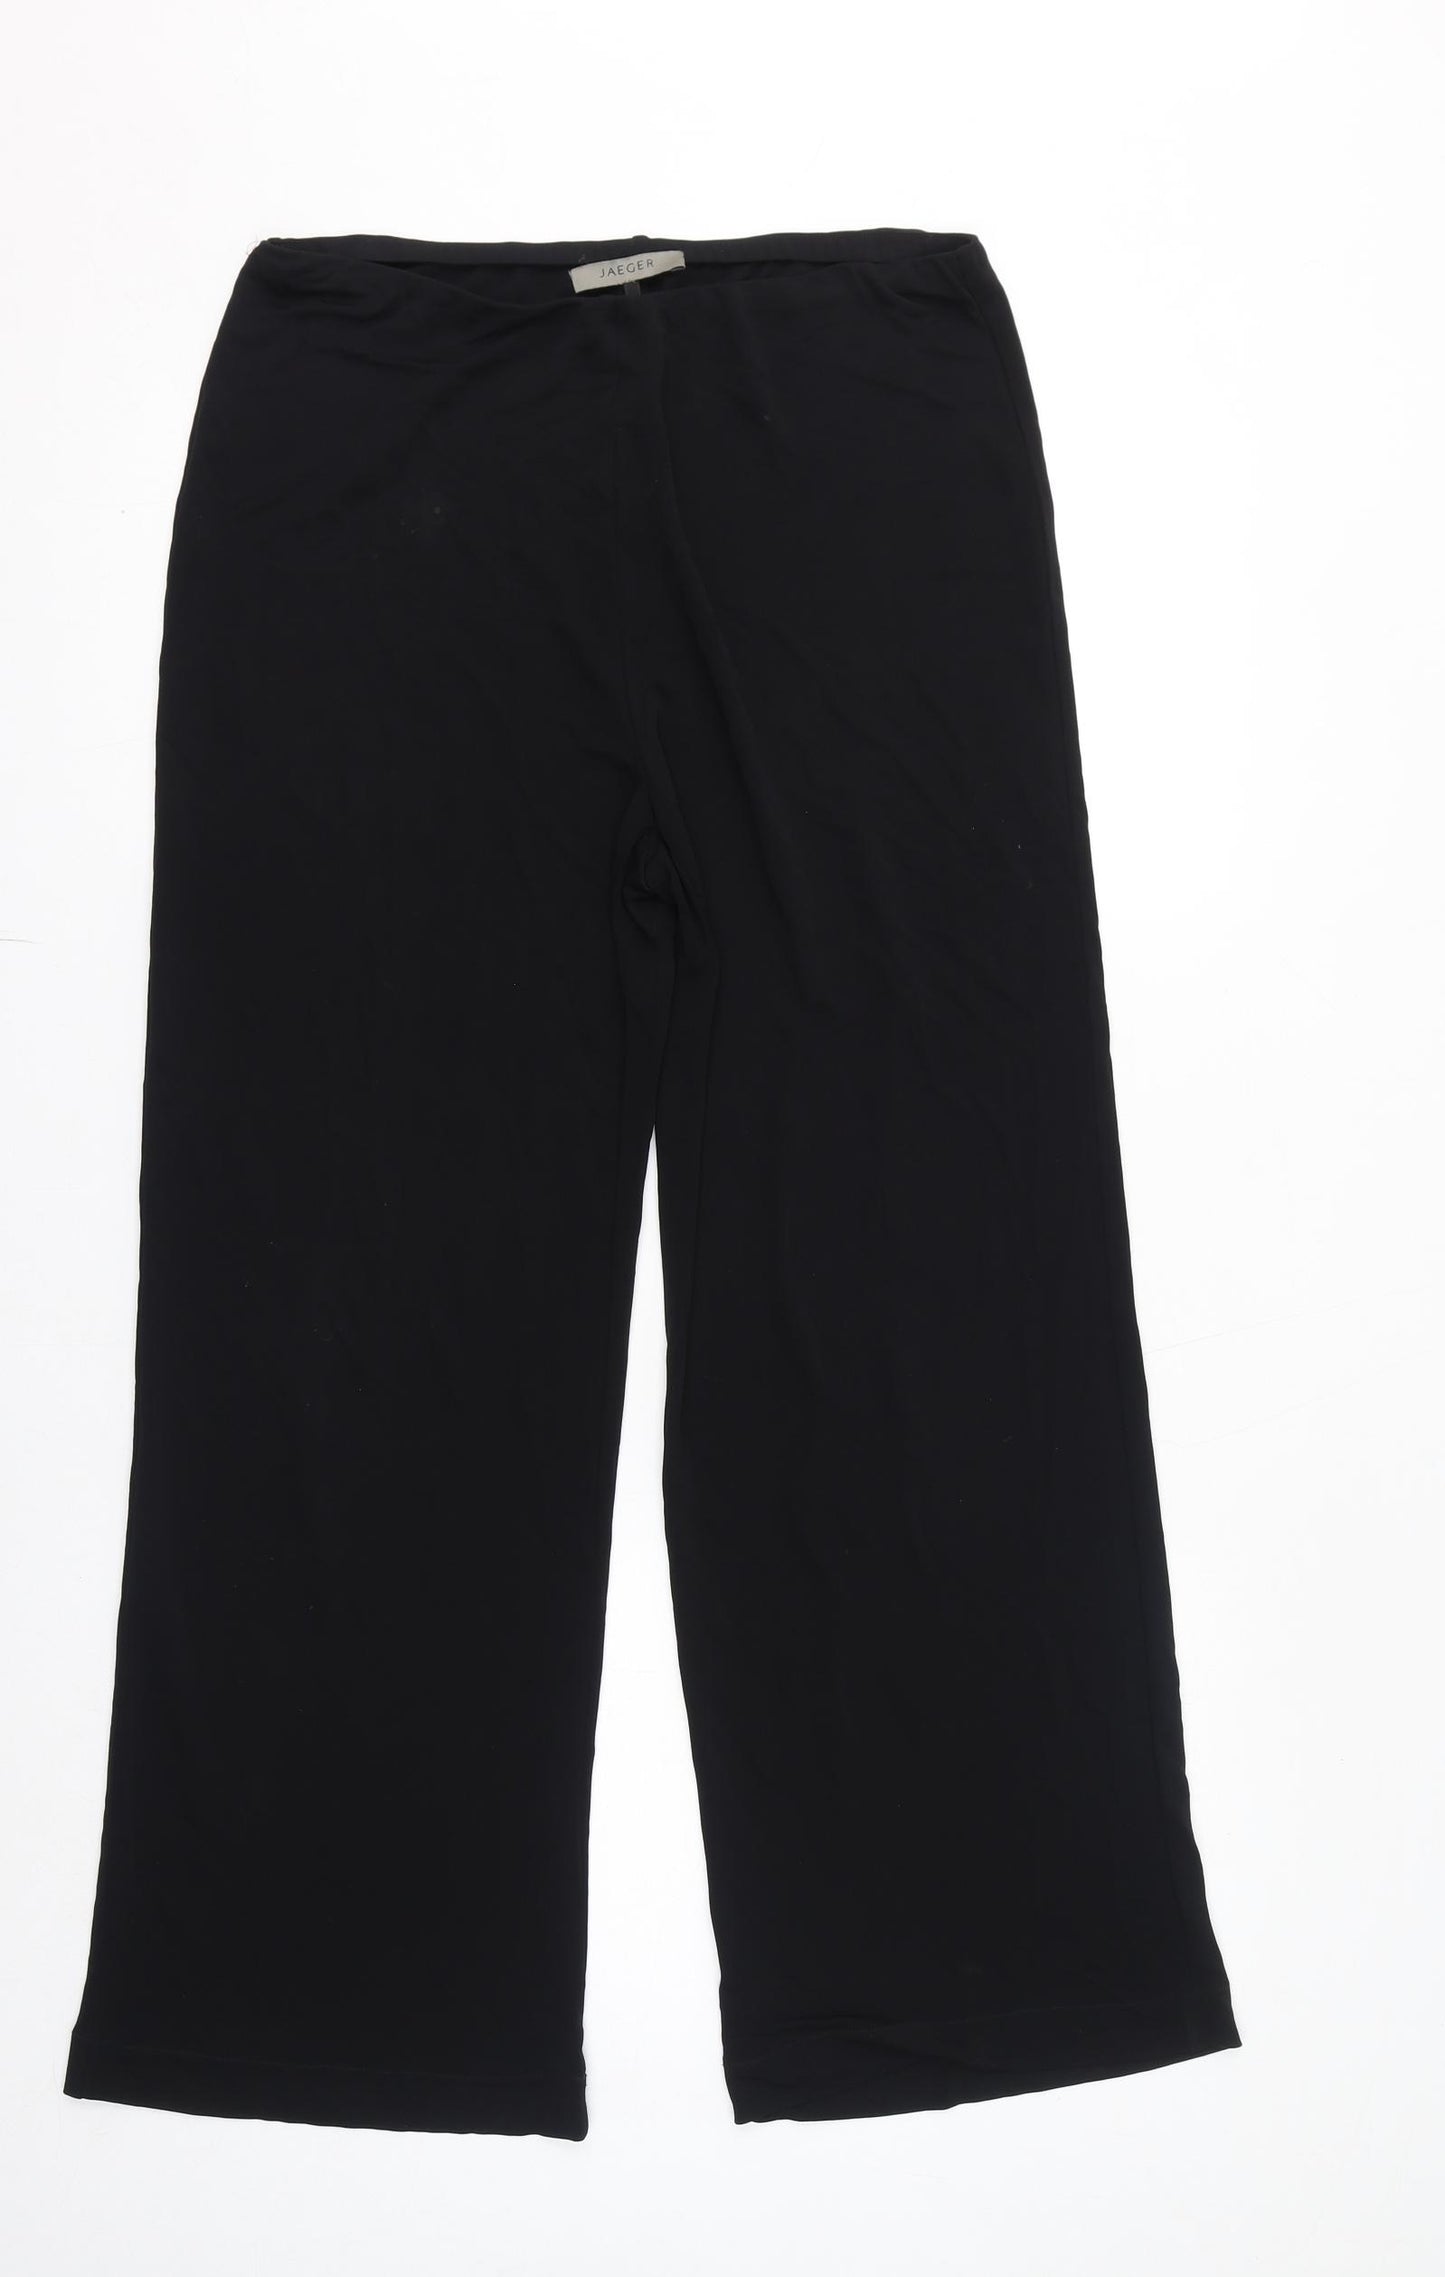 Jaeger Womens Black Viscose Trousers Size 14 L28 in Regular